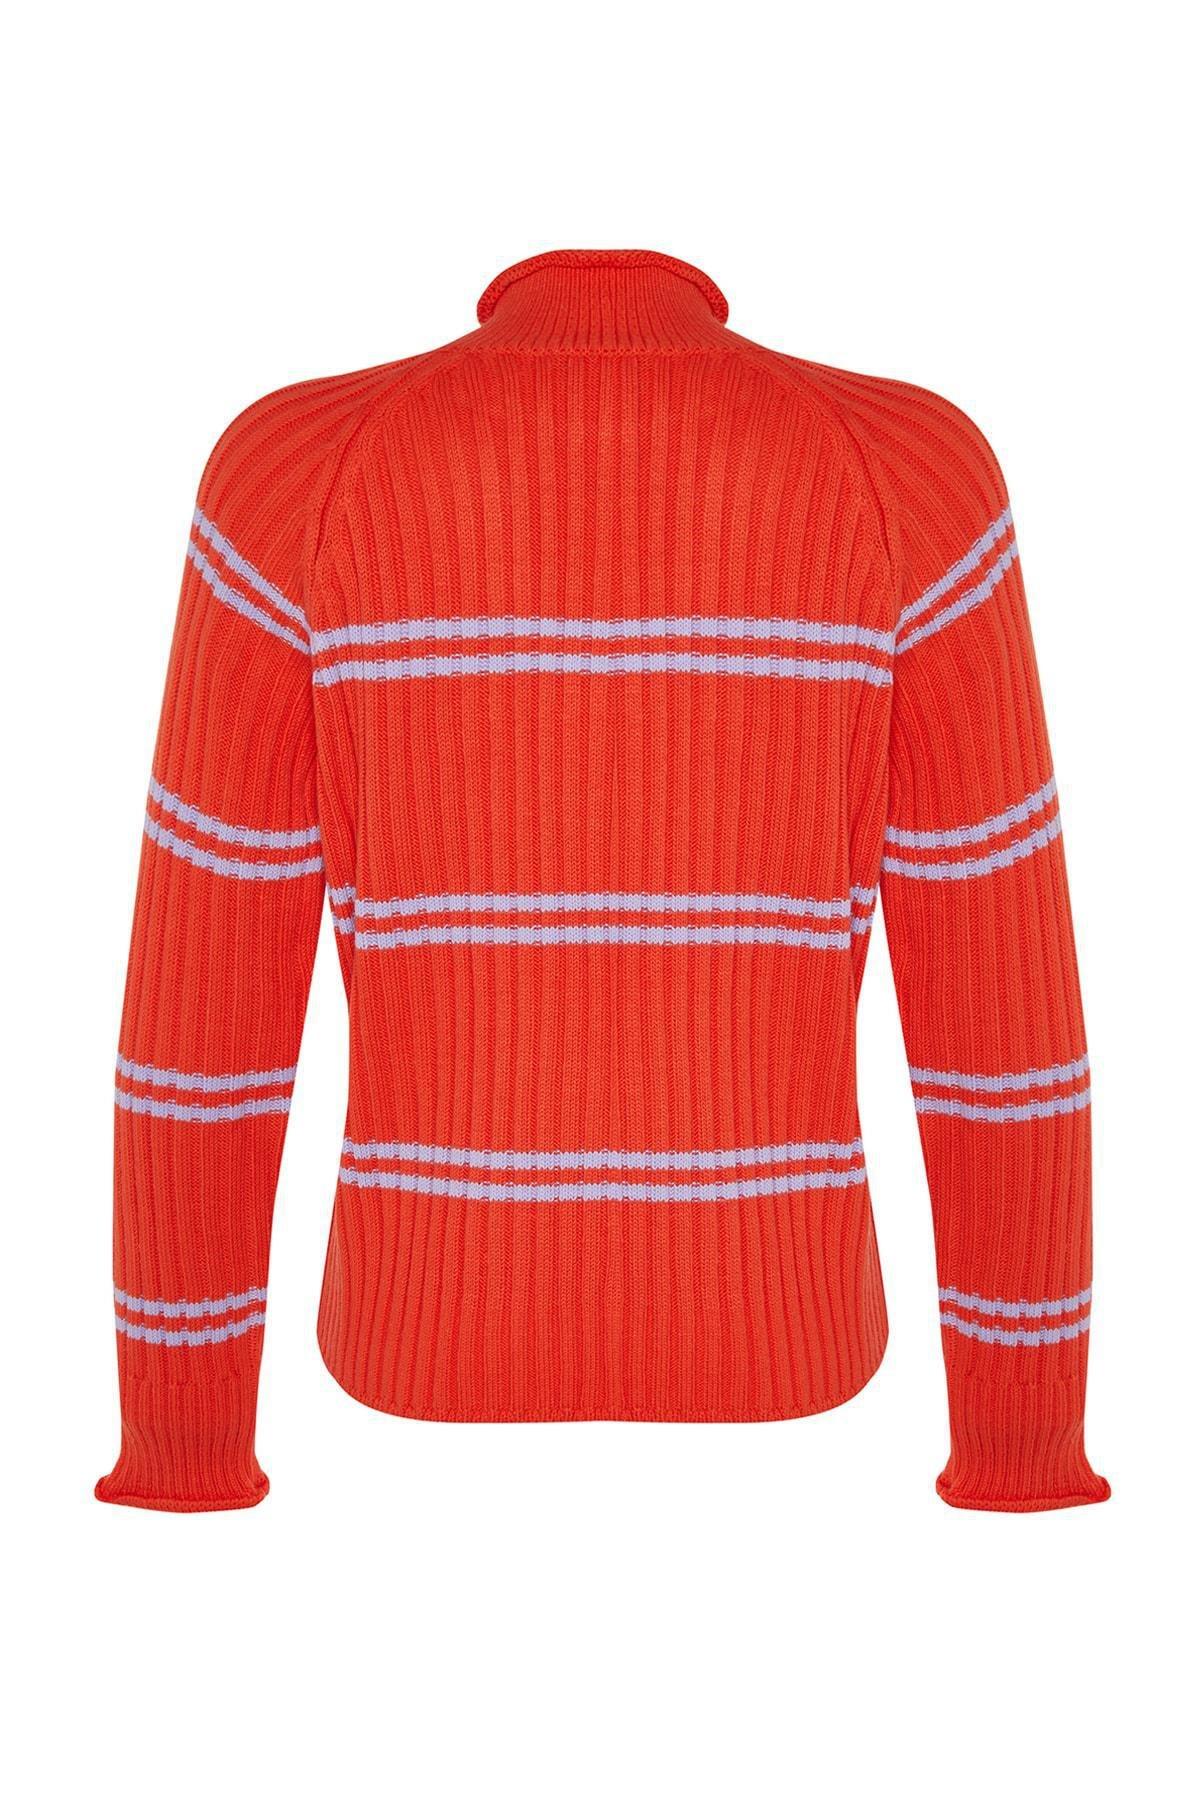 Trendyol - Orange Striped Sweater